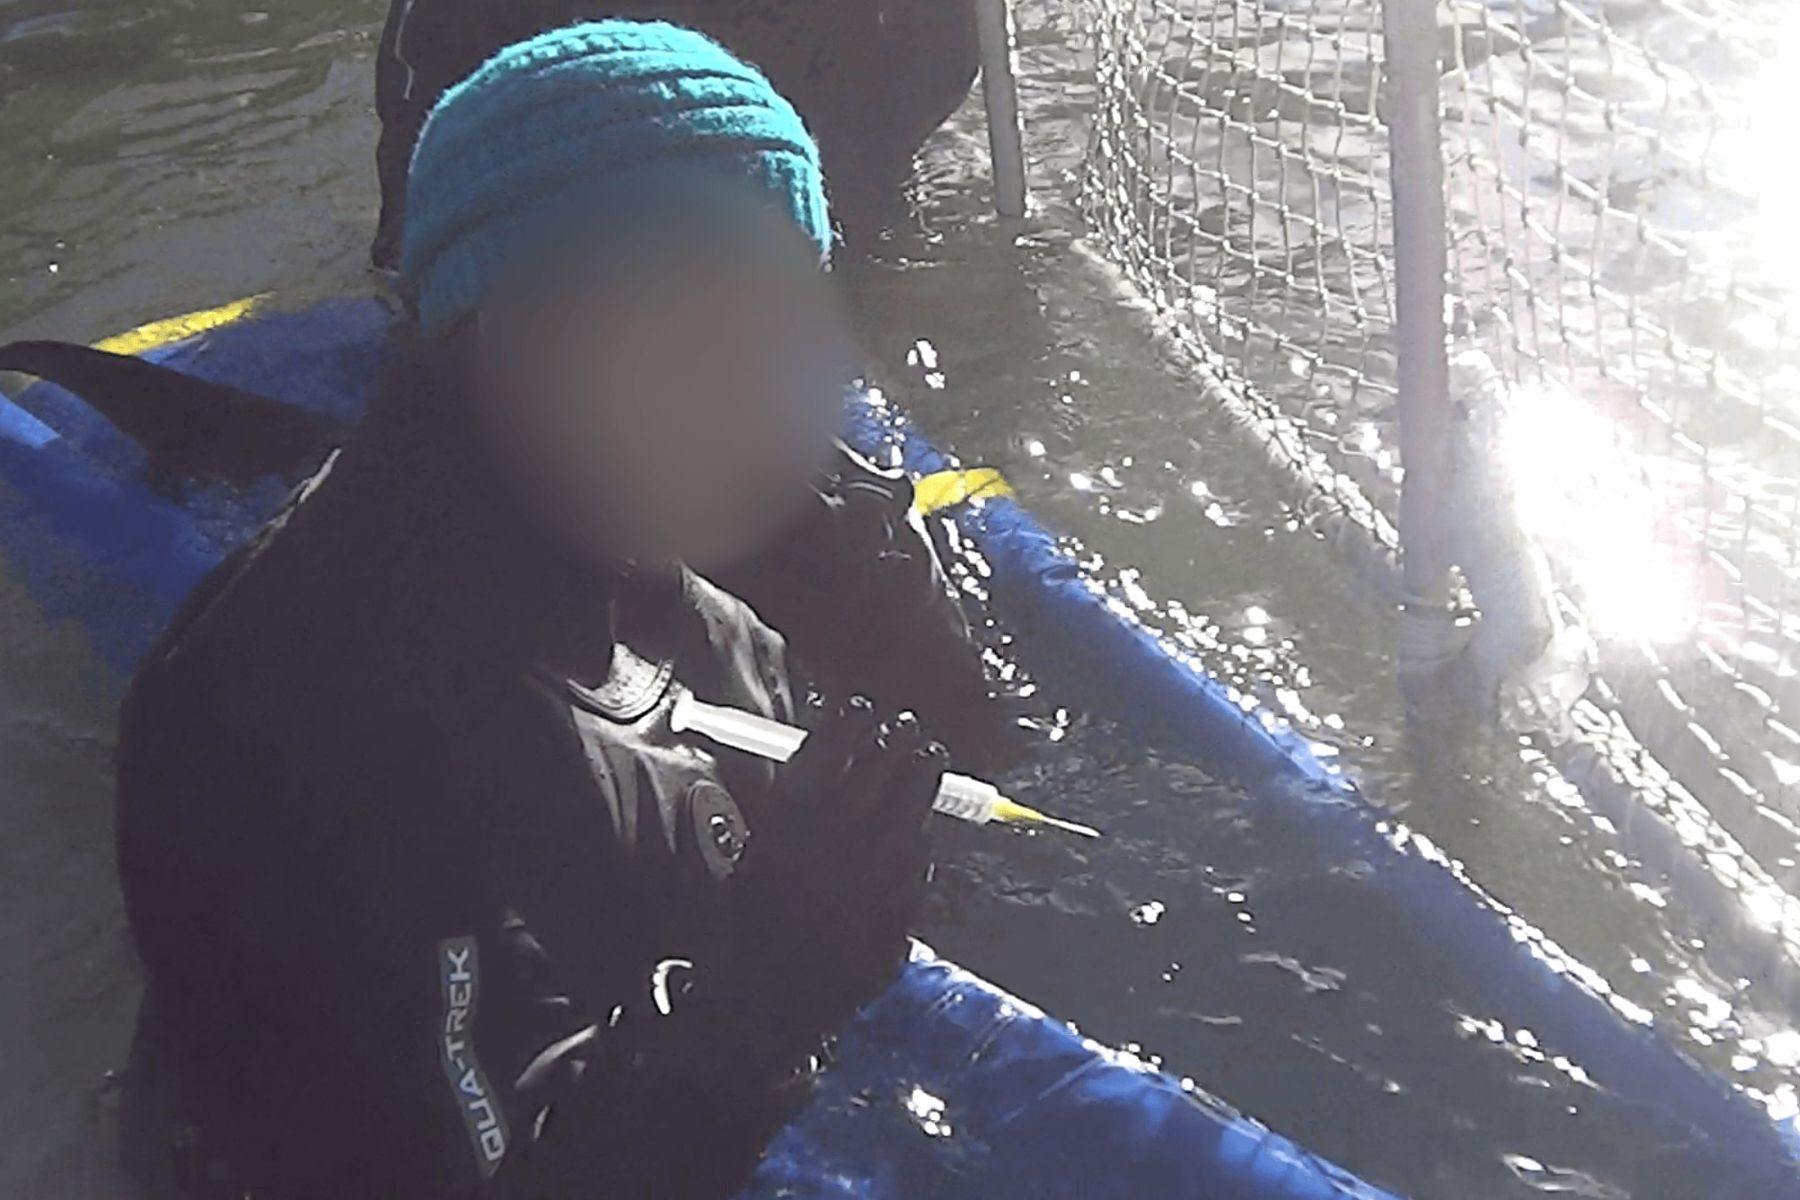 Northern Divine fish farm worker uses needle to microchip sturgeon.